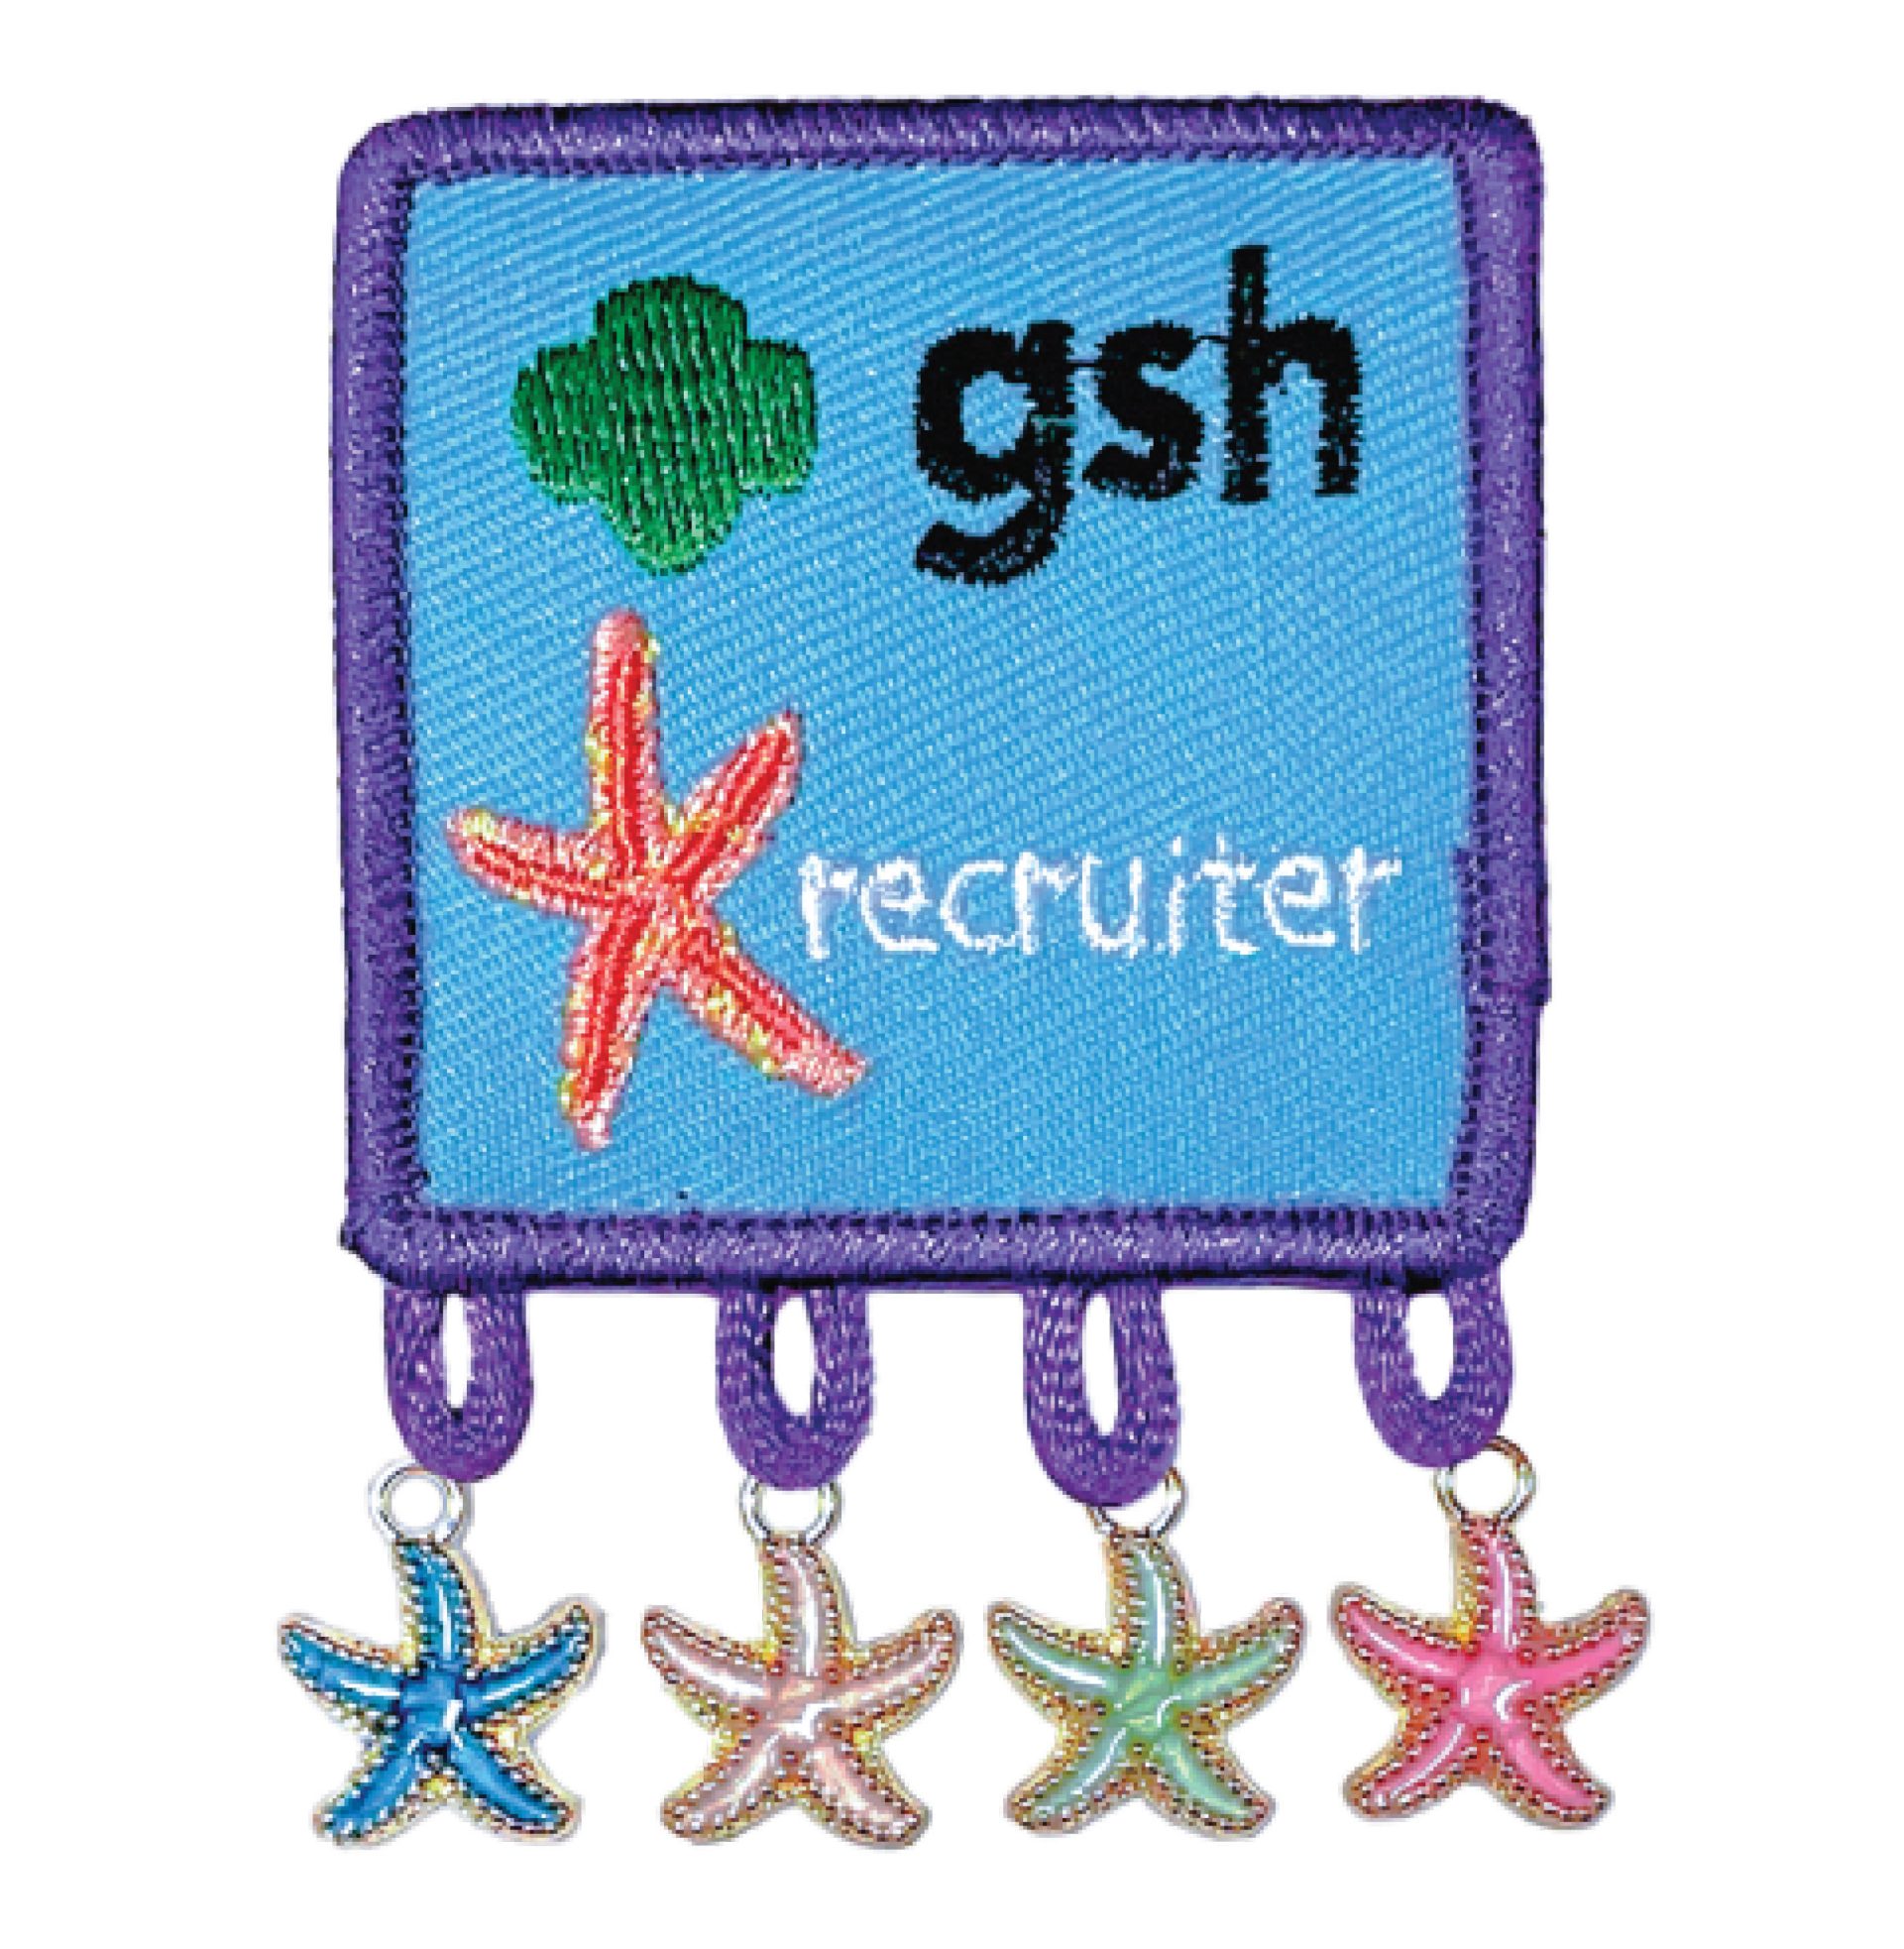 GSH Star Recruiter Patch